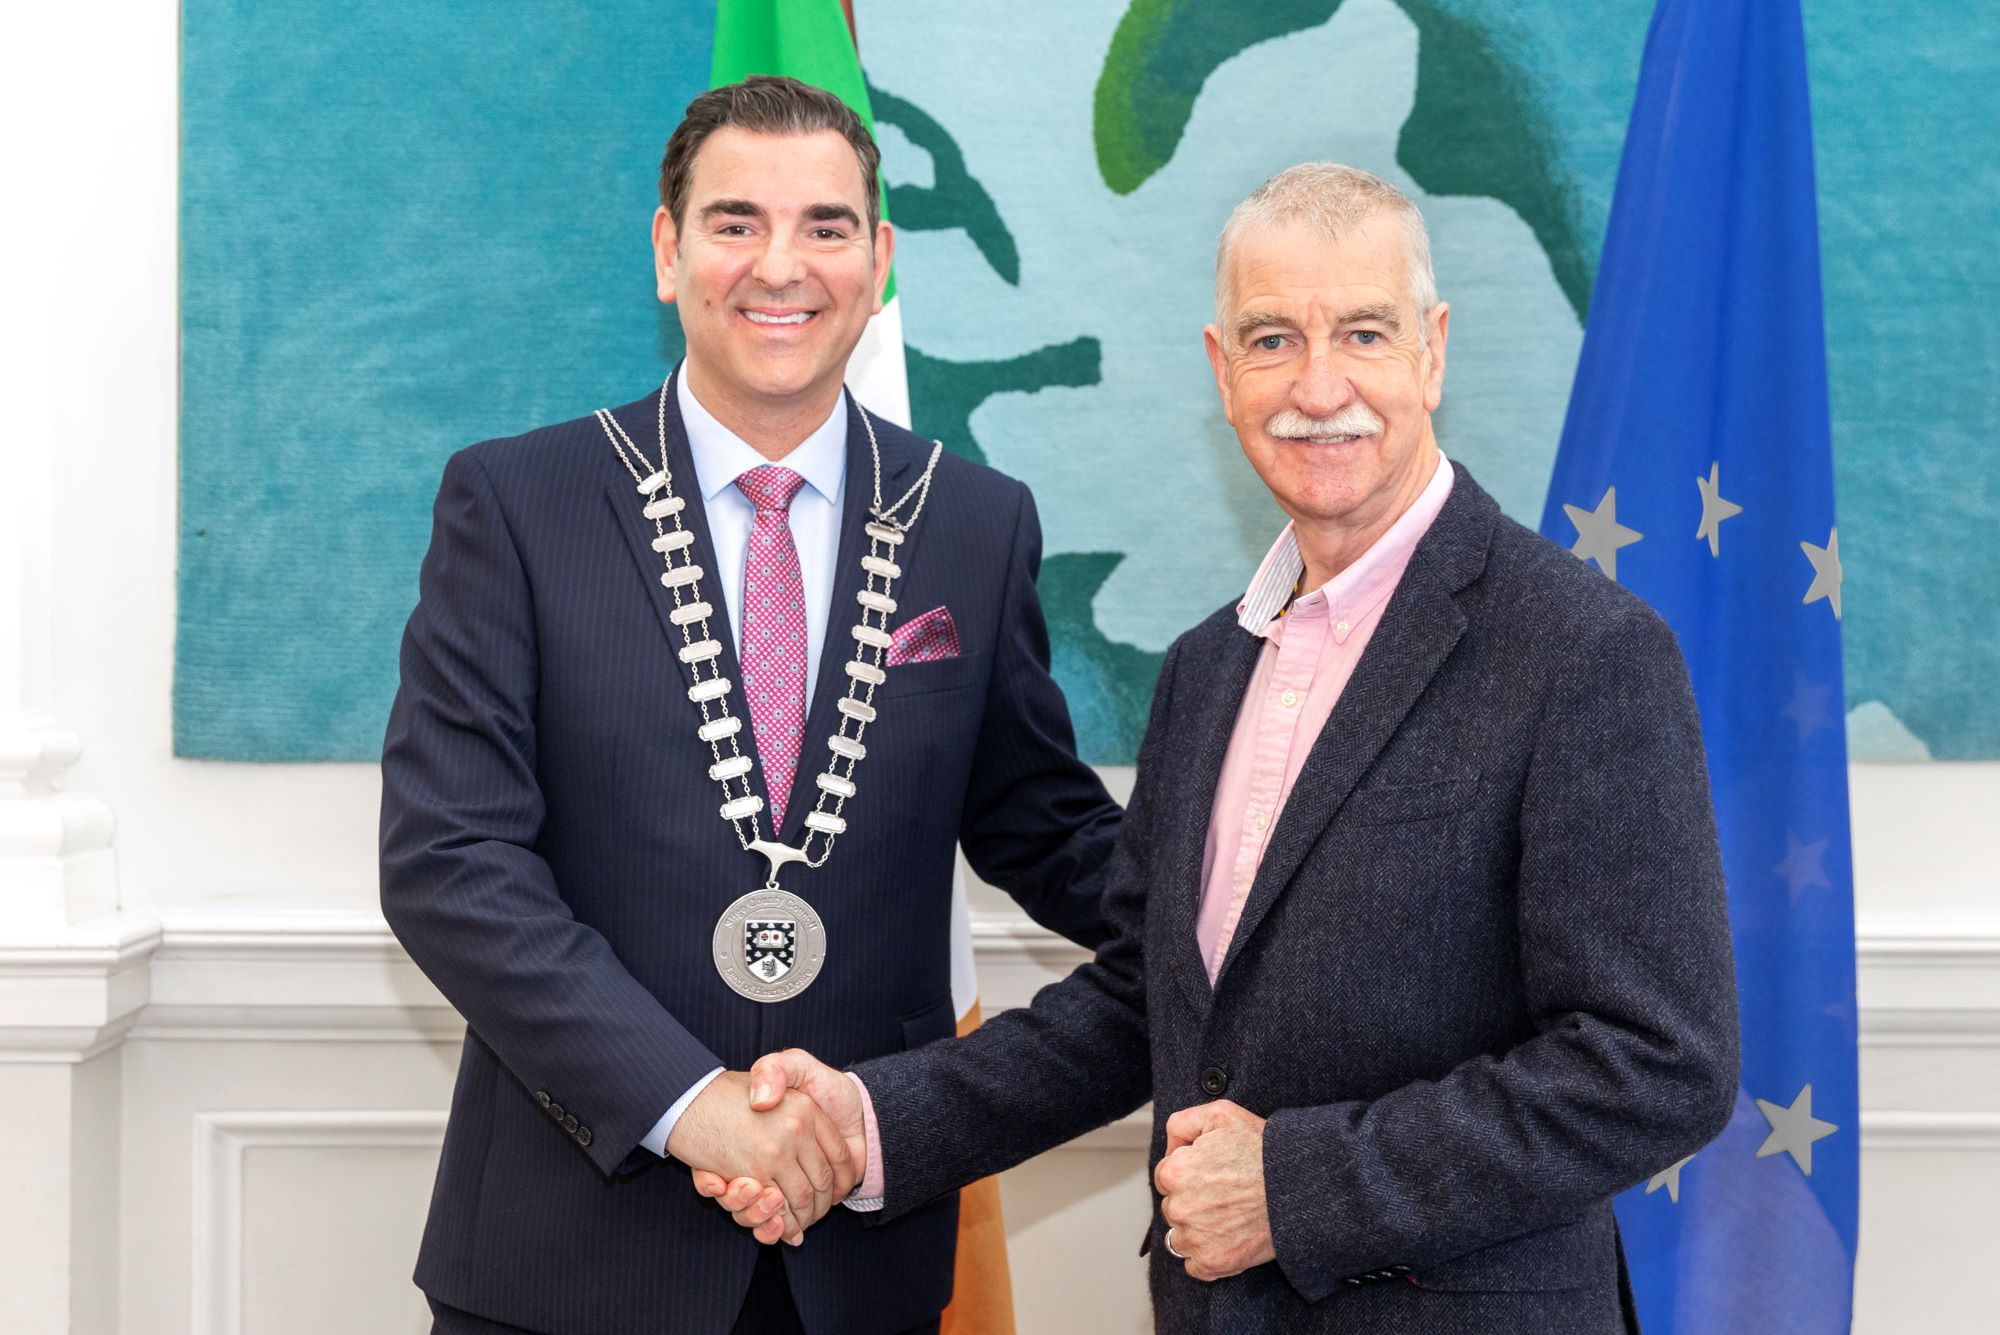  Mayor Cllr Tom MacSharry & Outgoing Mayor 